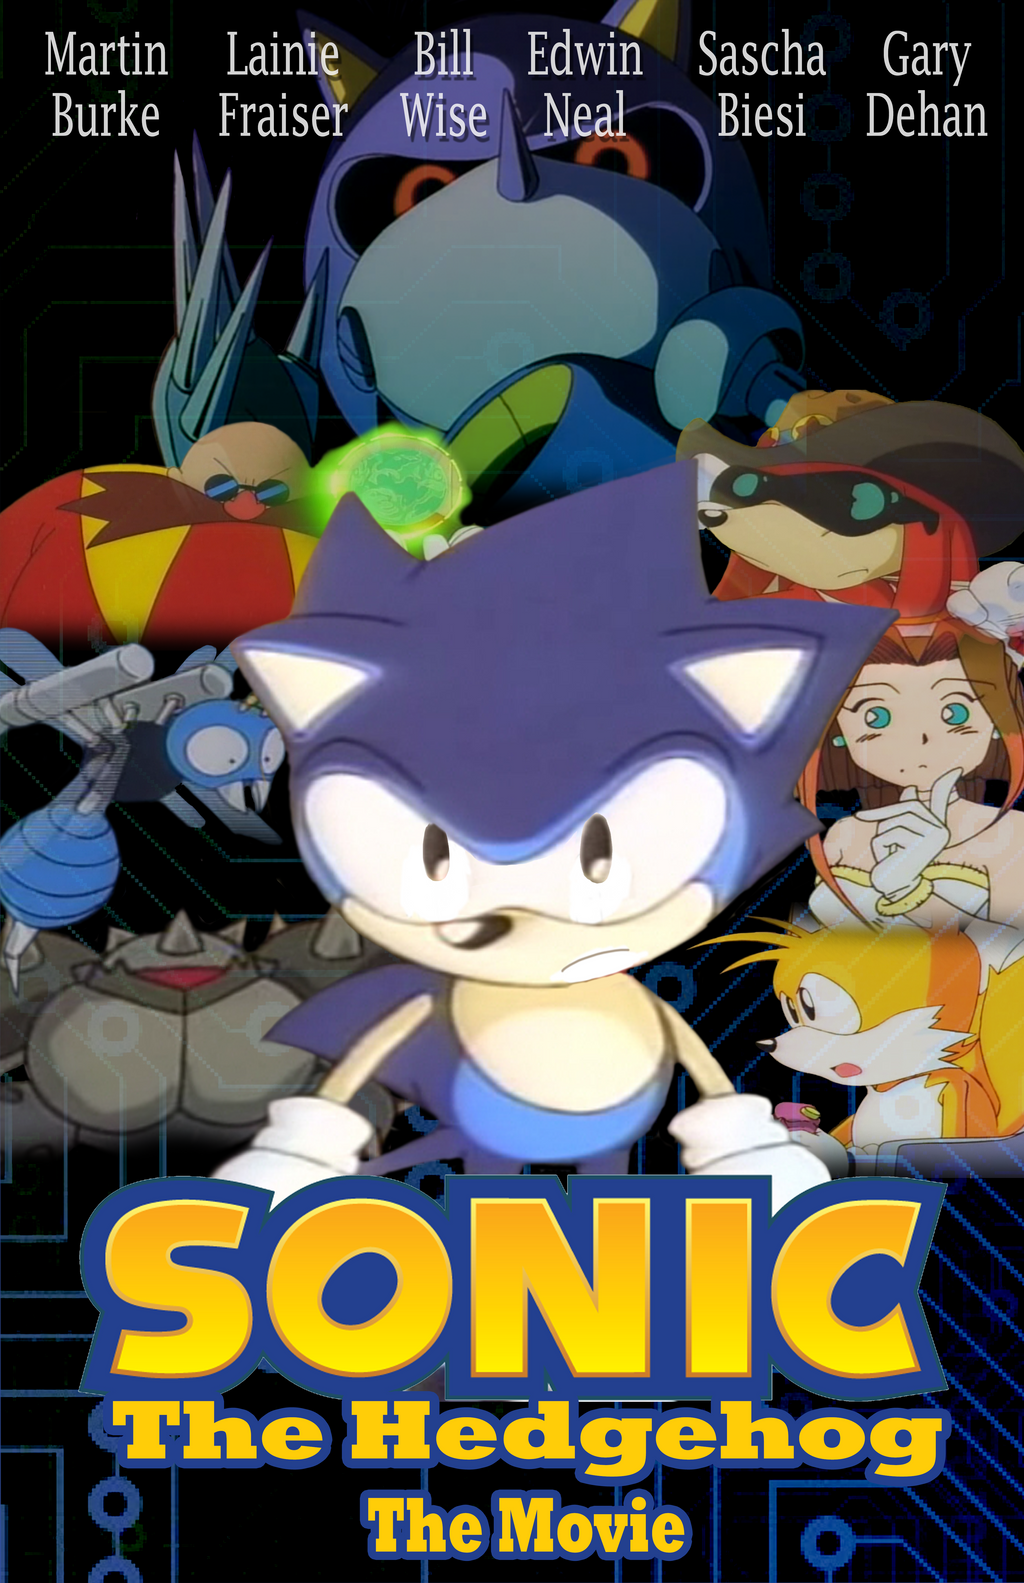 Sonic the Hedgehog The Movie Poster by Checkz3 on DeviantArt